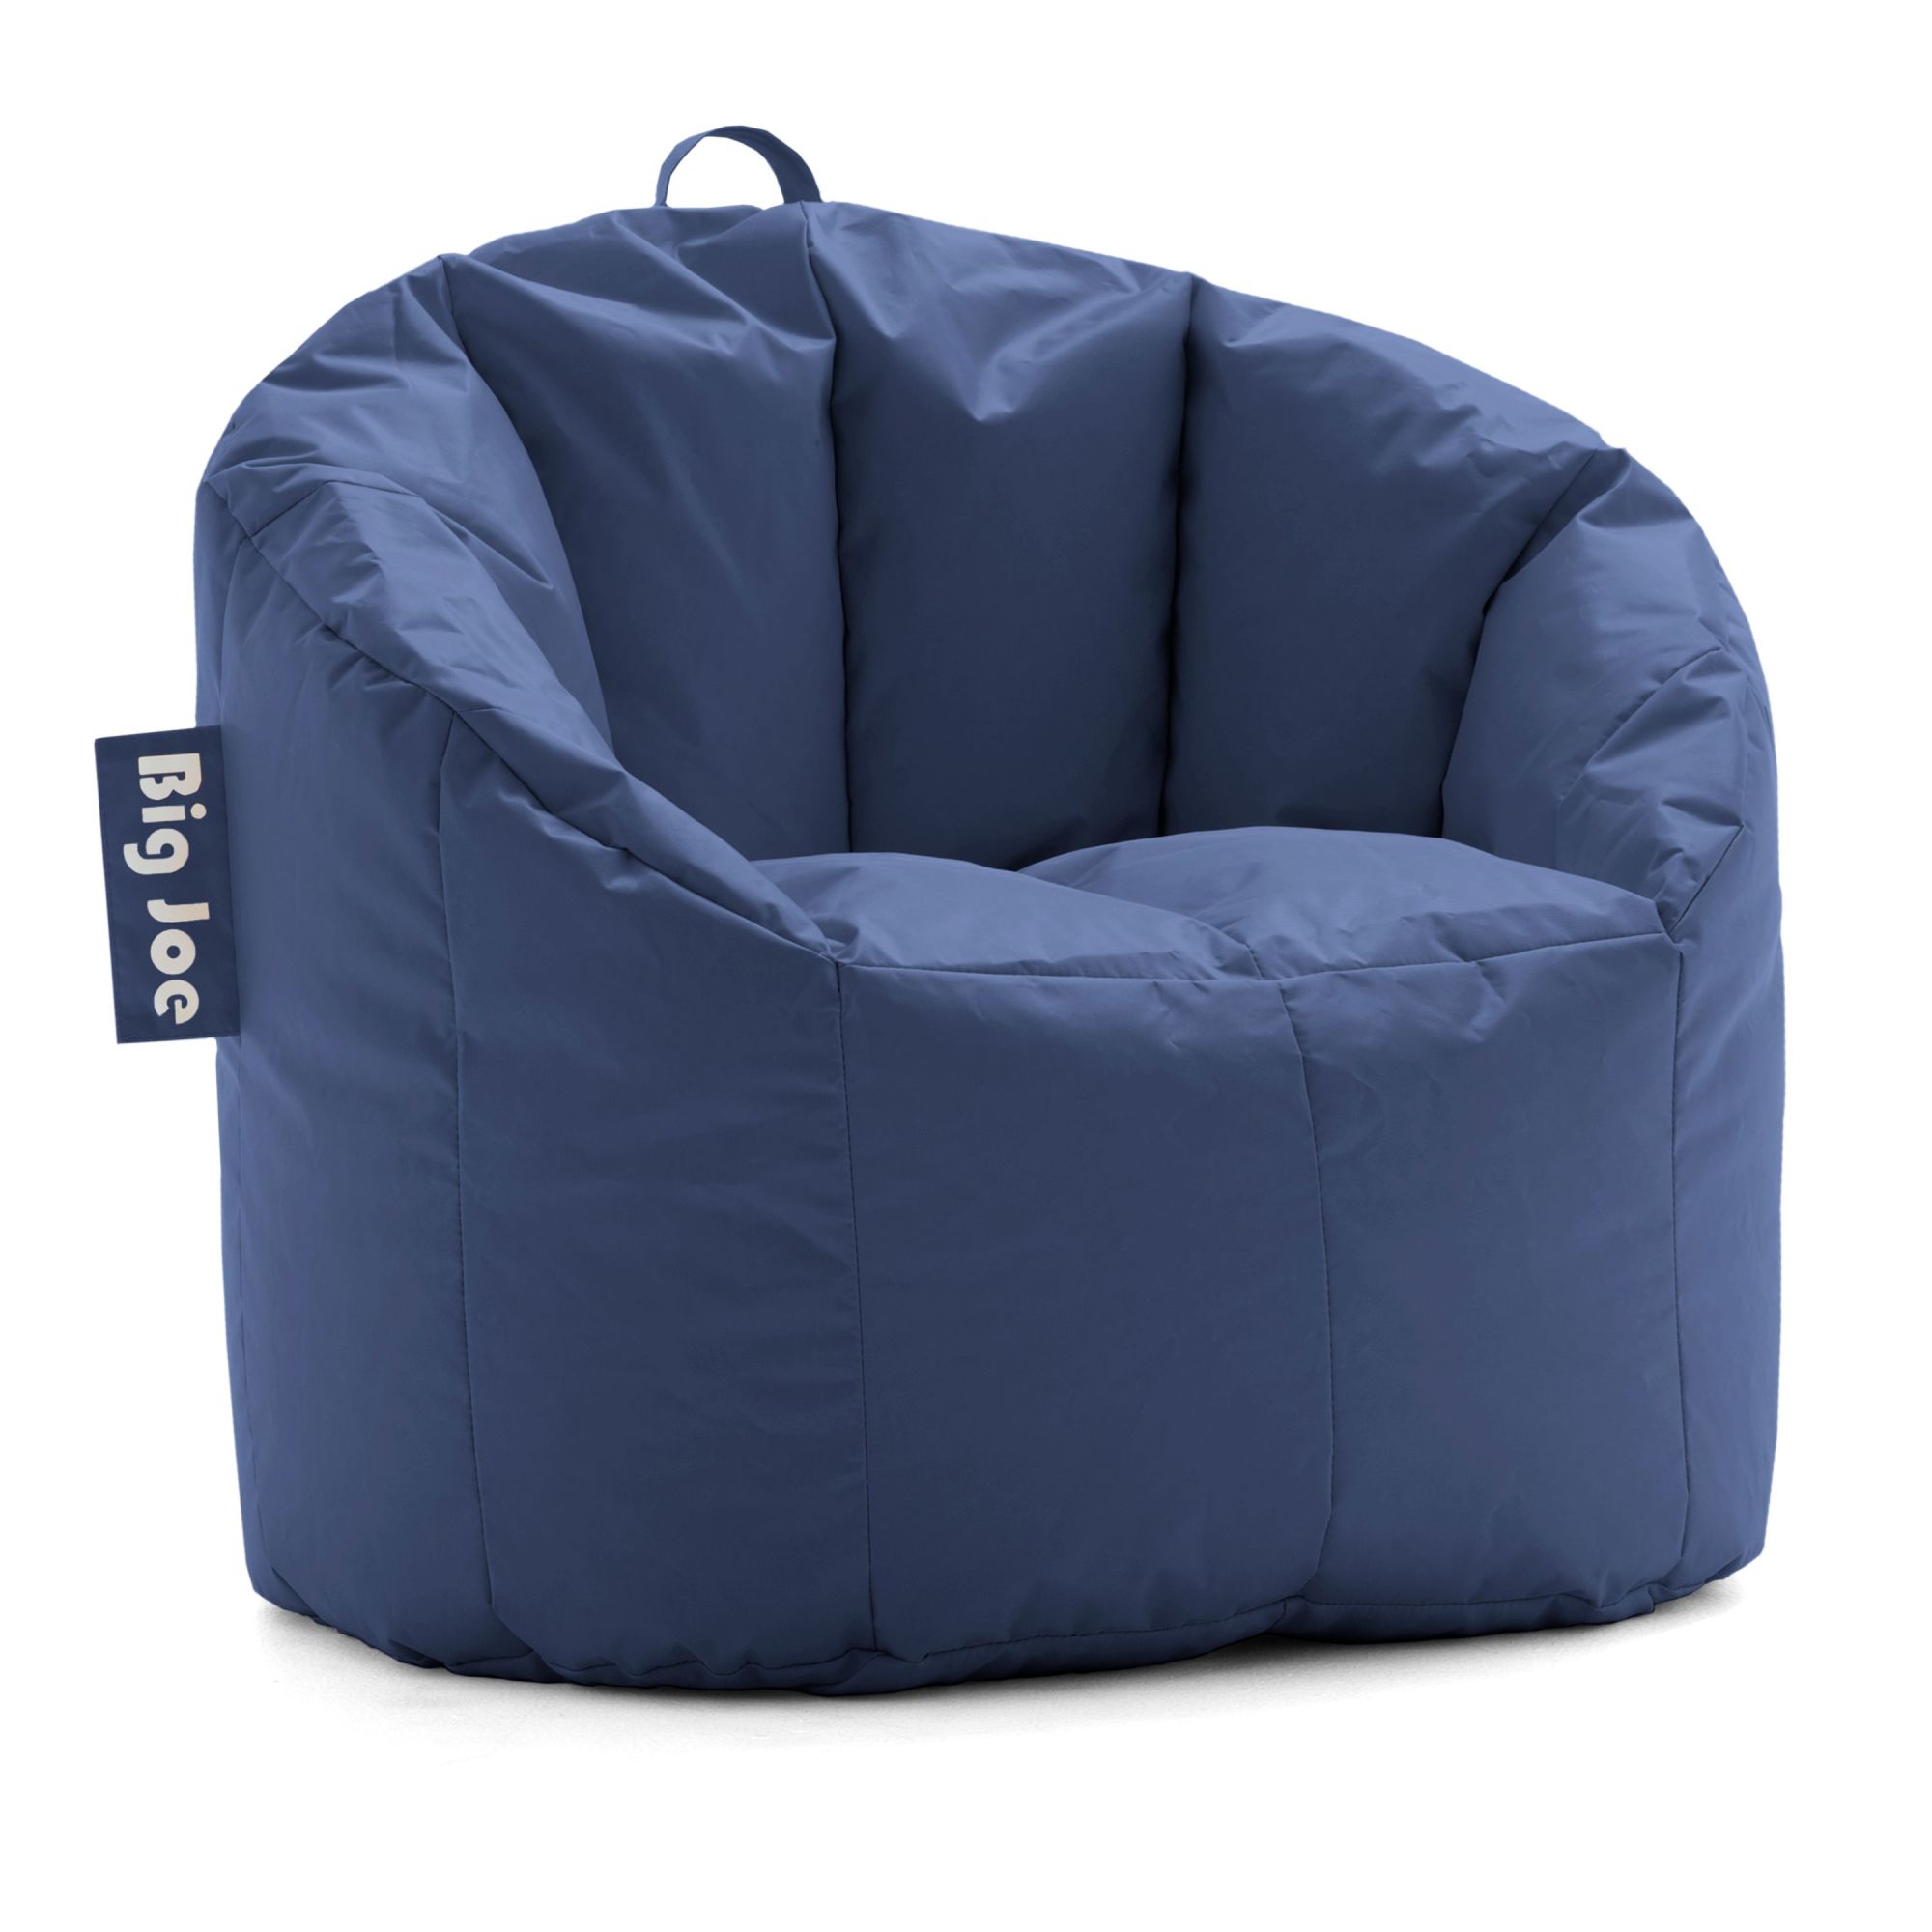 Big Joe Milano Bean Bag Chair, Navy Smartmax, Durable Polyester Nylon Blend, 2.5 feet - image 3 of 8